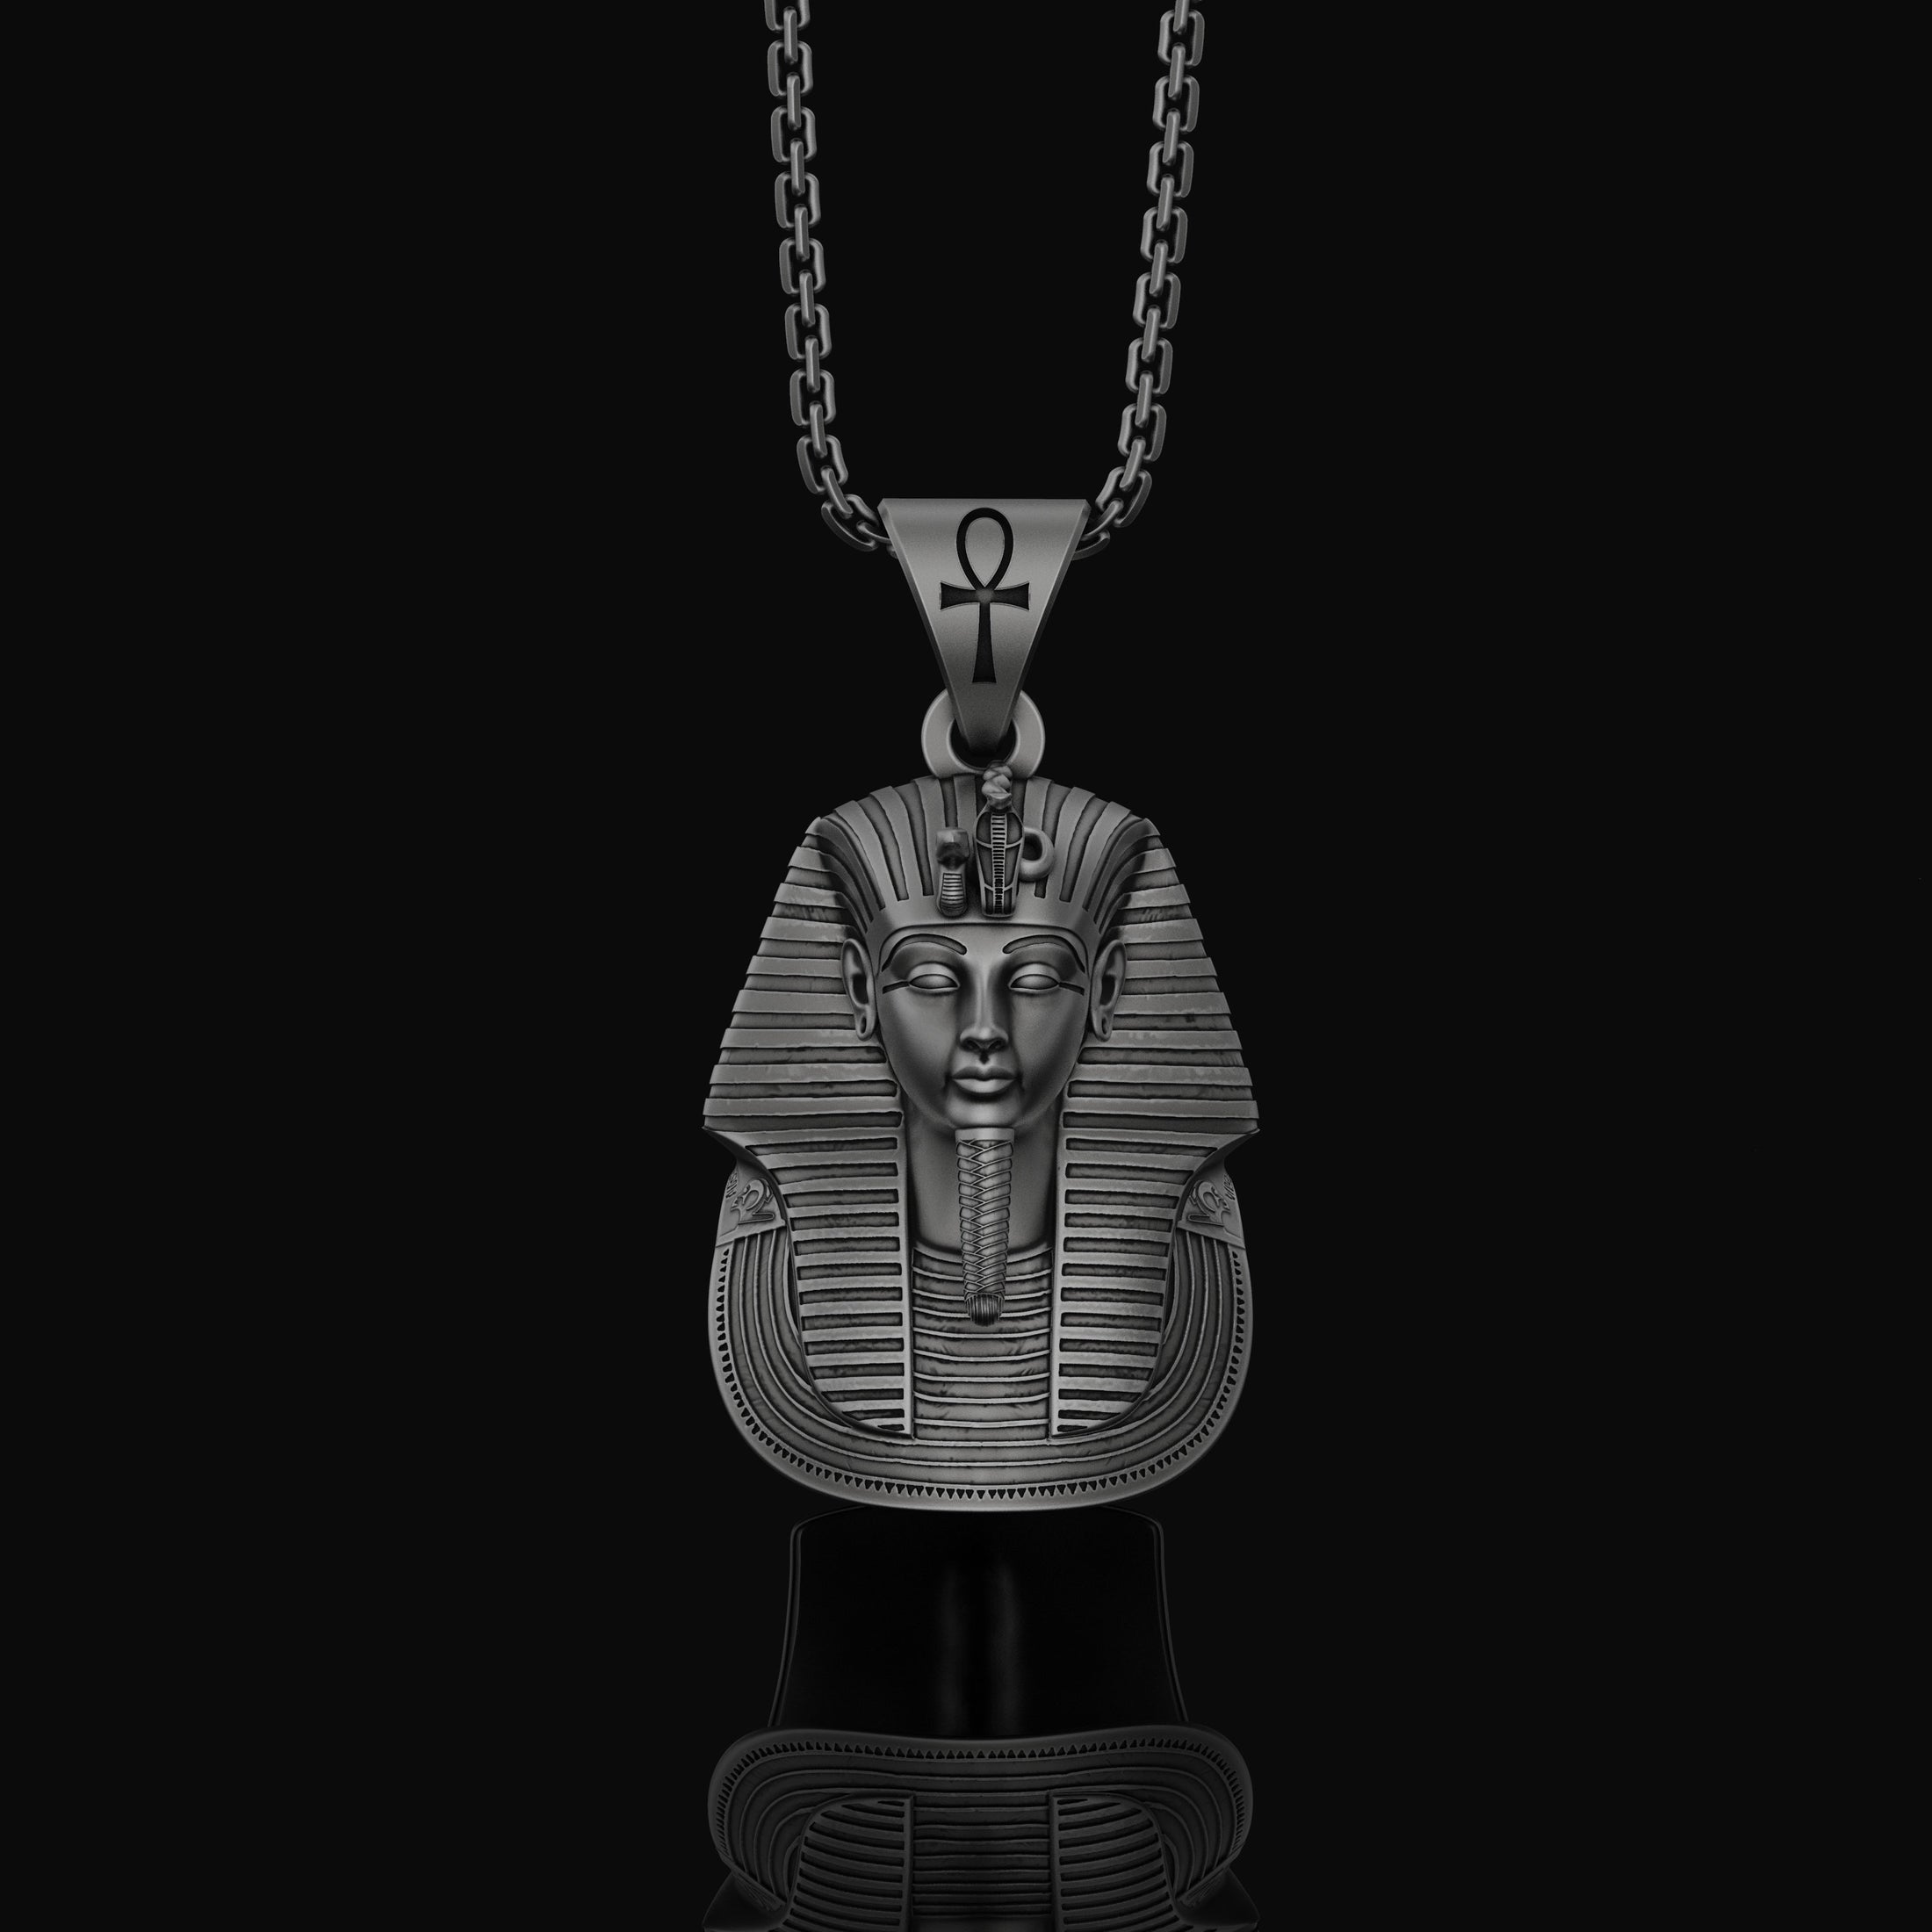 Silver Tutankhamun Pendant - Egyptian King Necklace, Pharaoh Tutankhamun Jewelry, Historical Artifact